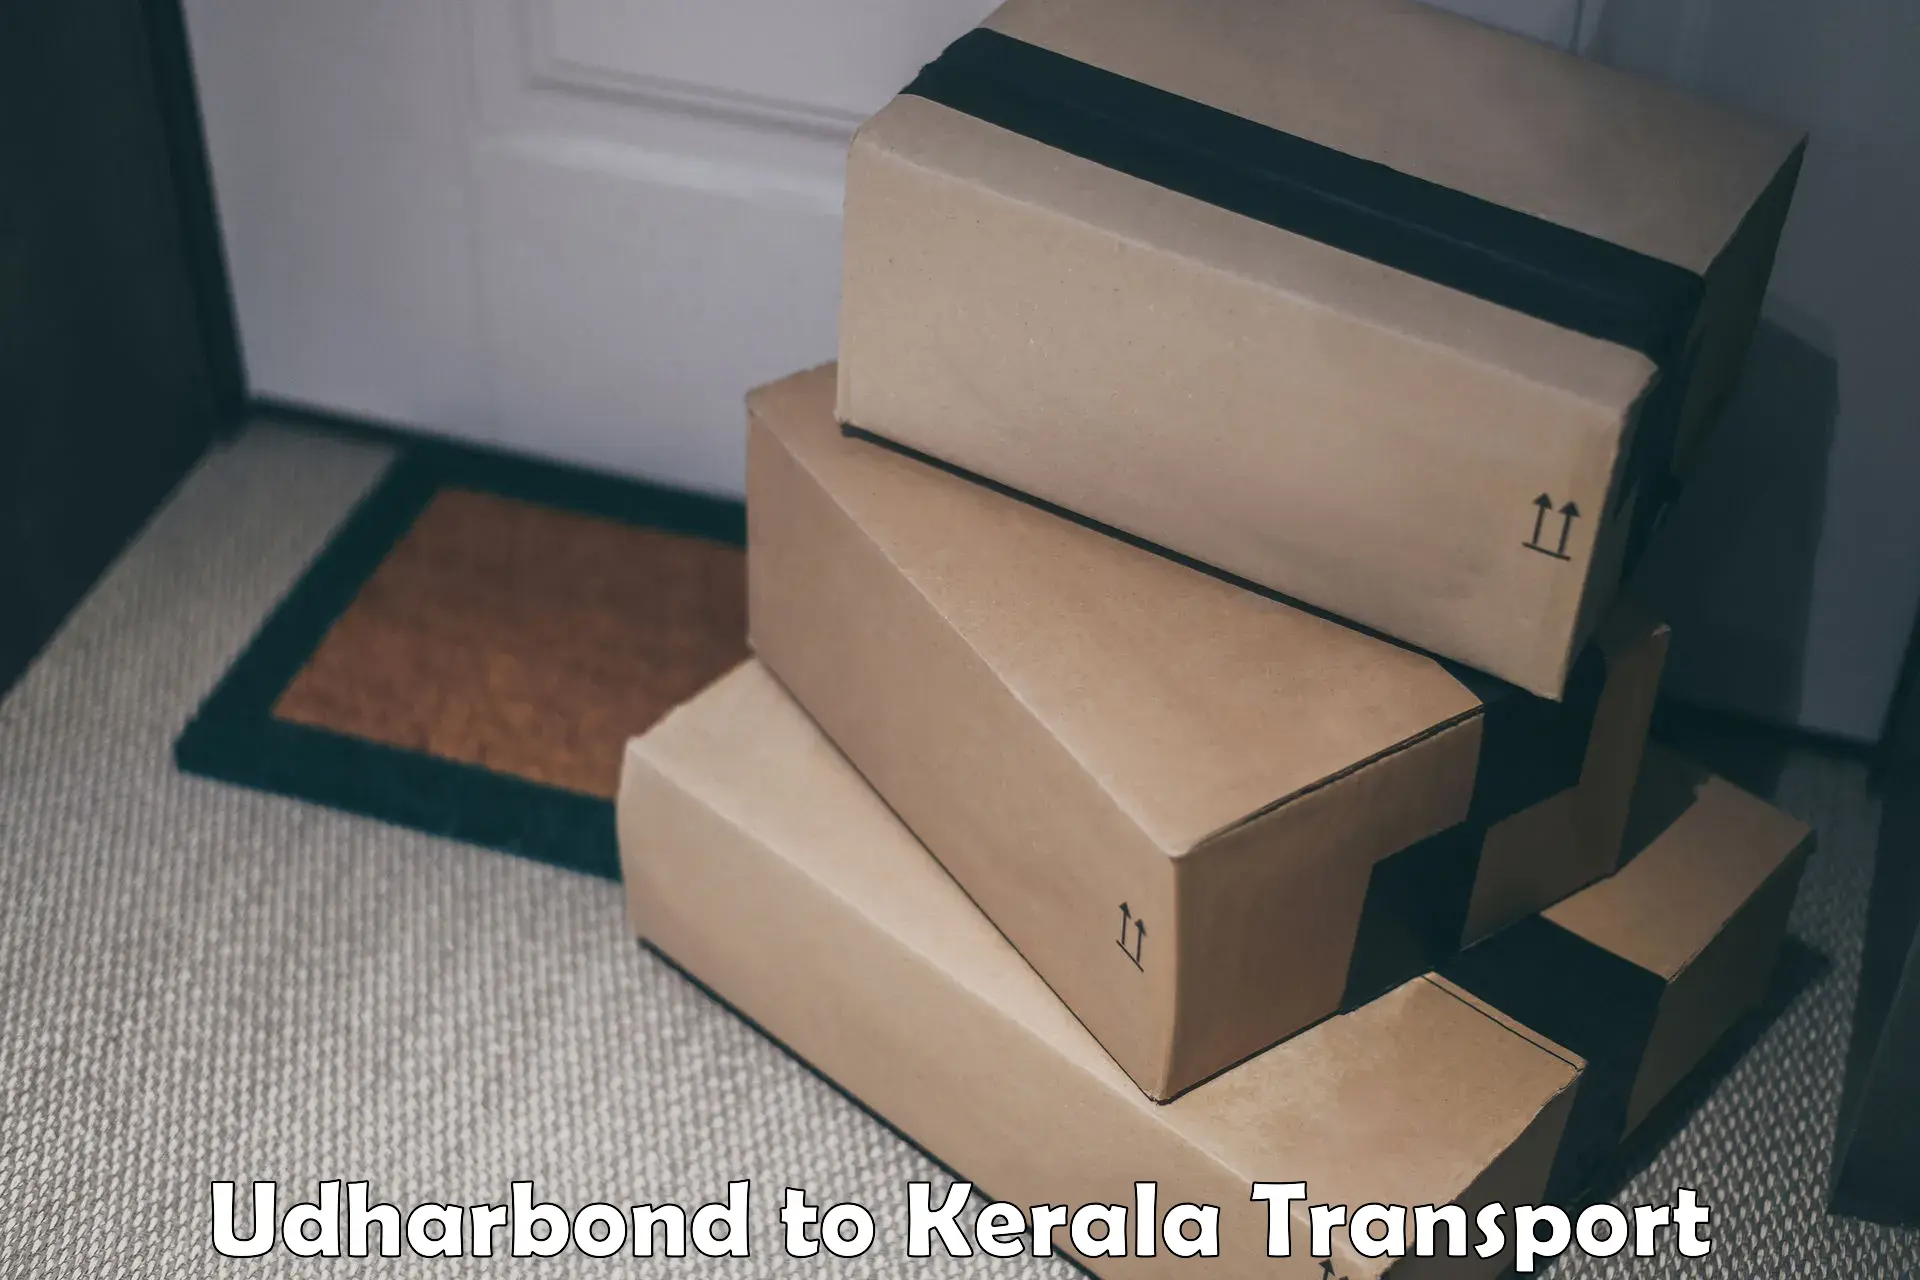 Transport in sharing Udharbond to Kannur